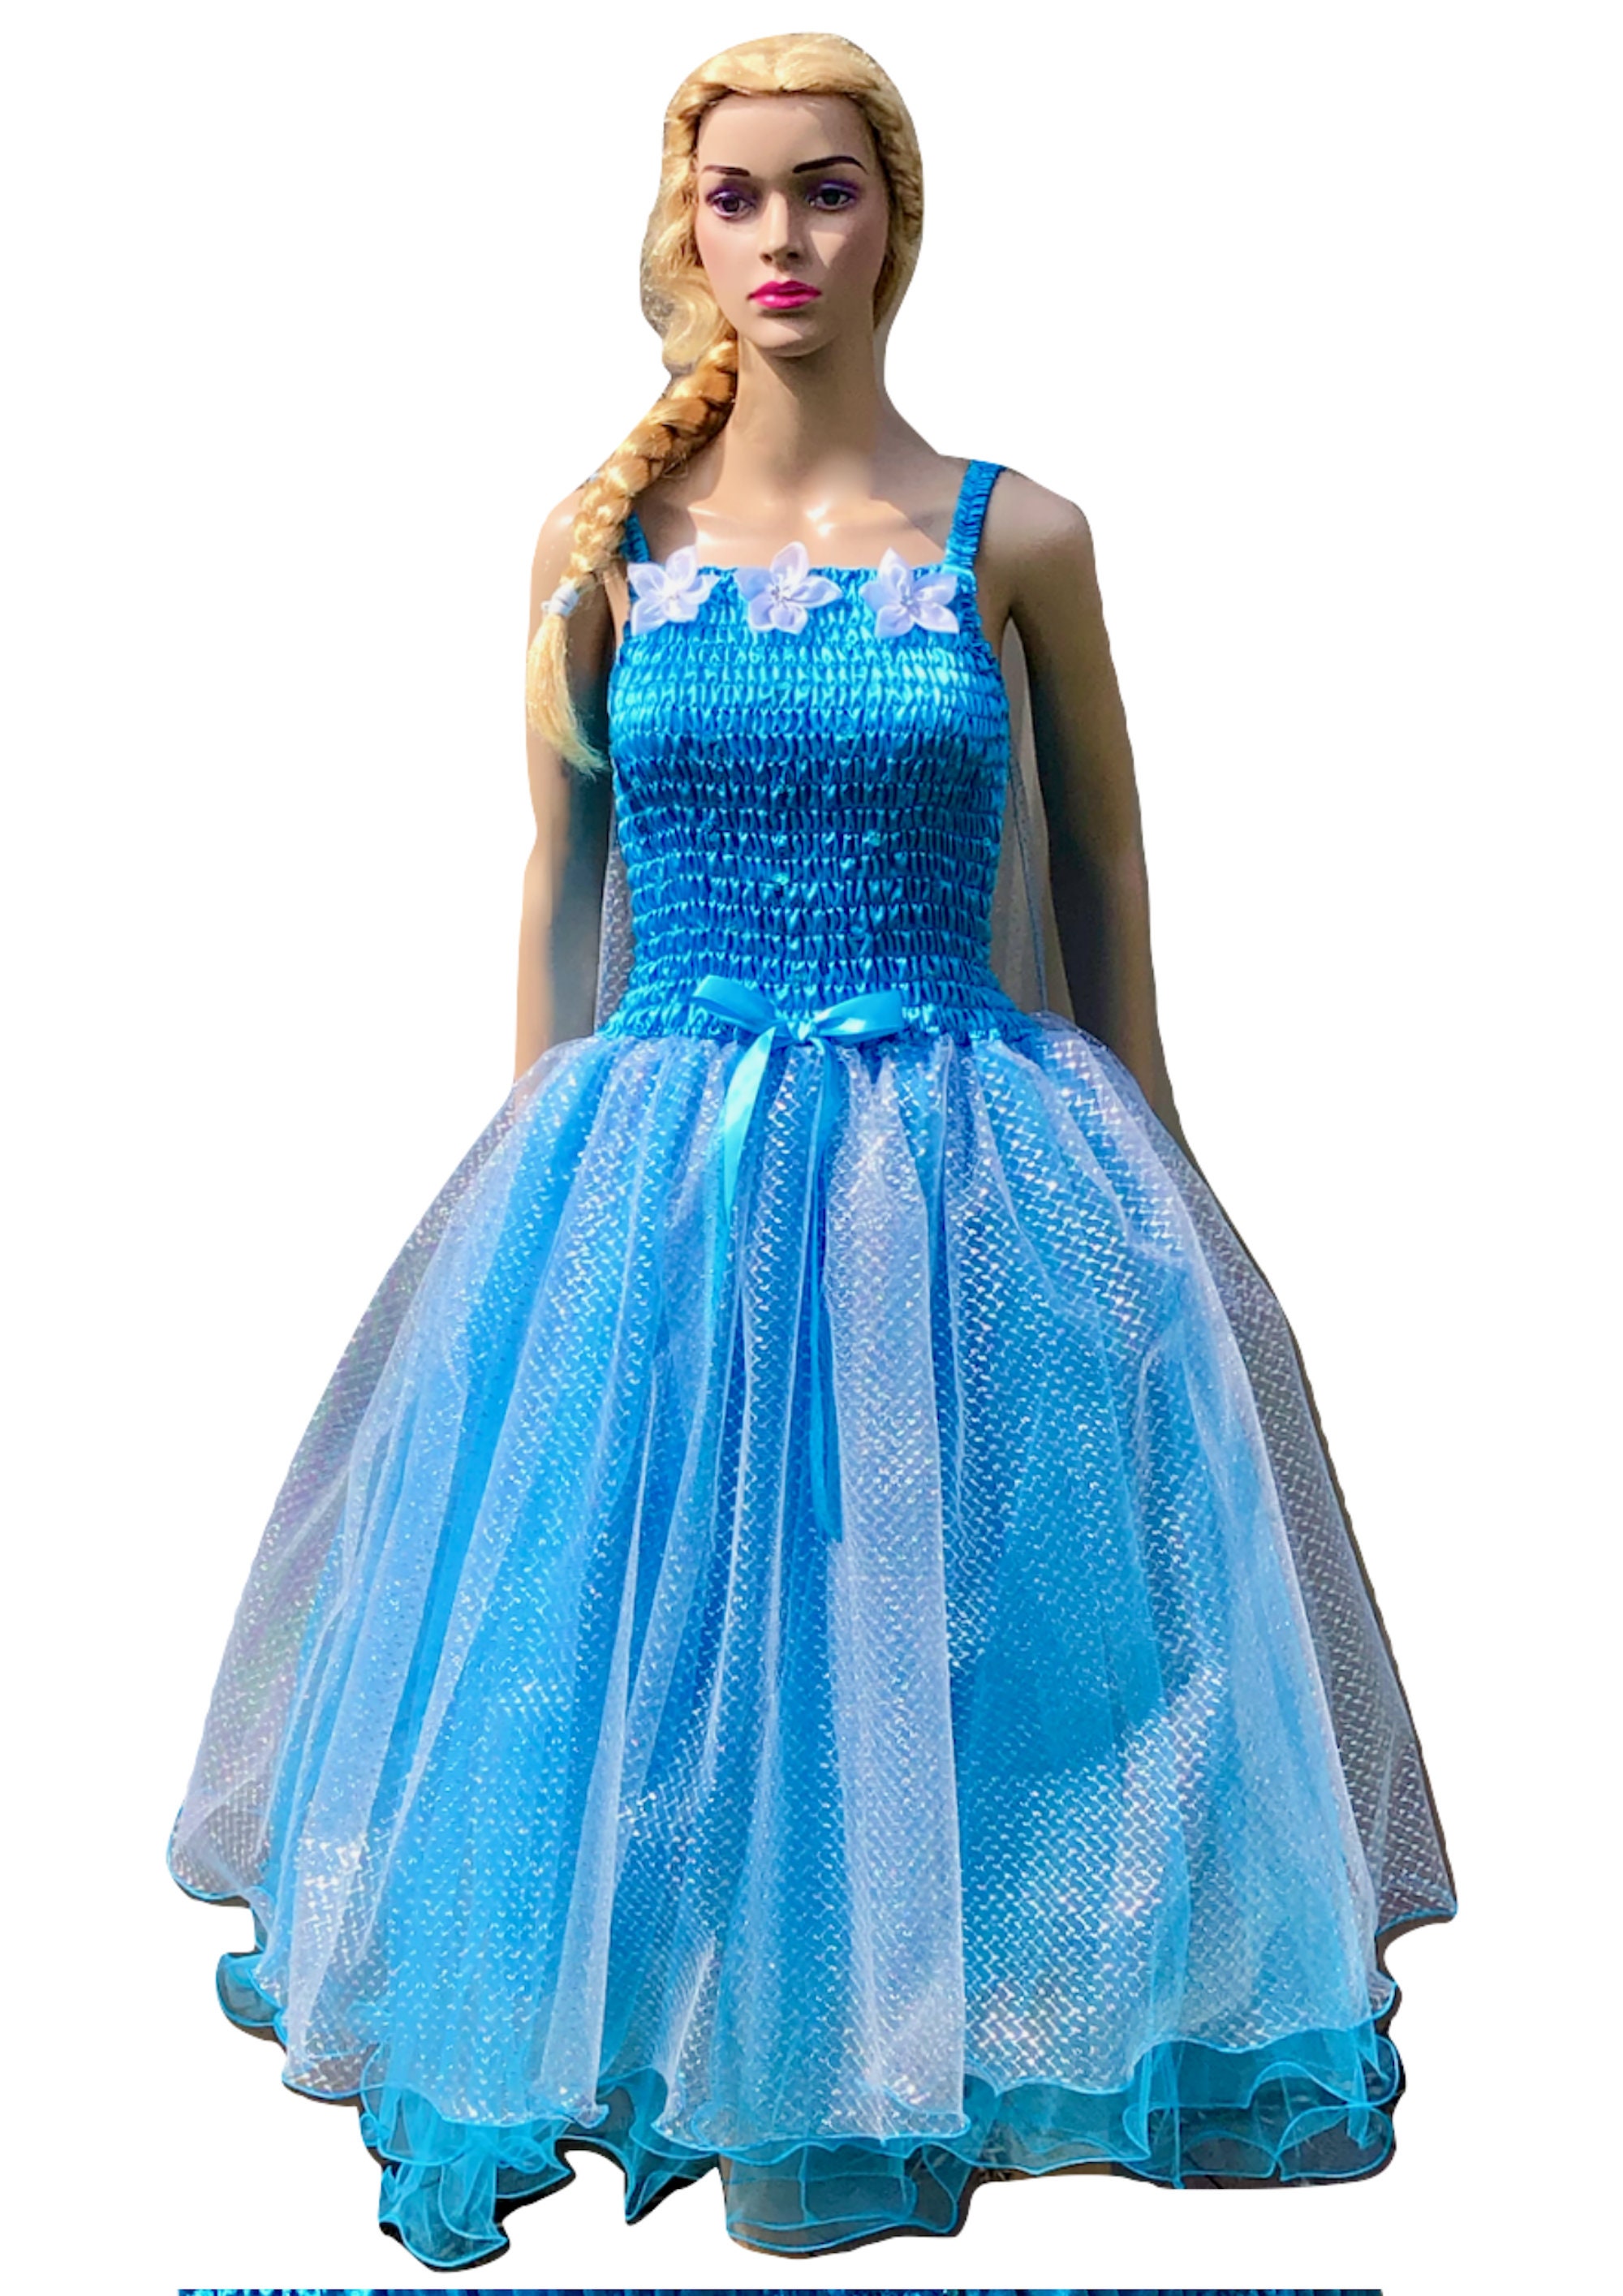 Elsa Costume, Sparkly Fashion Elsa, Frozen Disney Princess, Disney Costume  Inspired, Frozen Elsa Costume Adult Elsa Cosplay Coronation Dress - Etsy |  Disney princess dresses, Fantasy gowns, Sparkly fashion